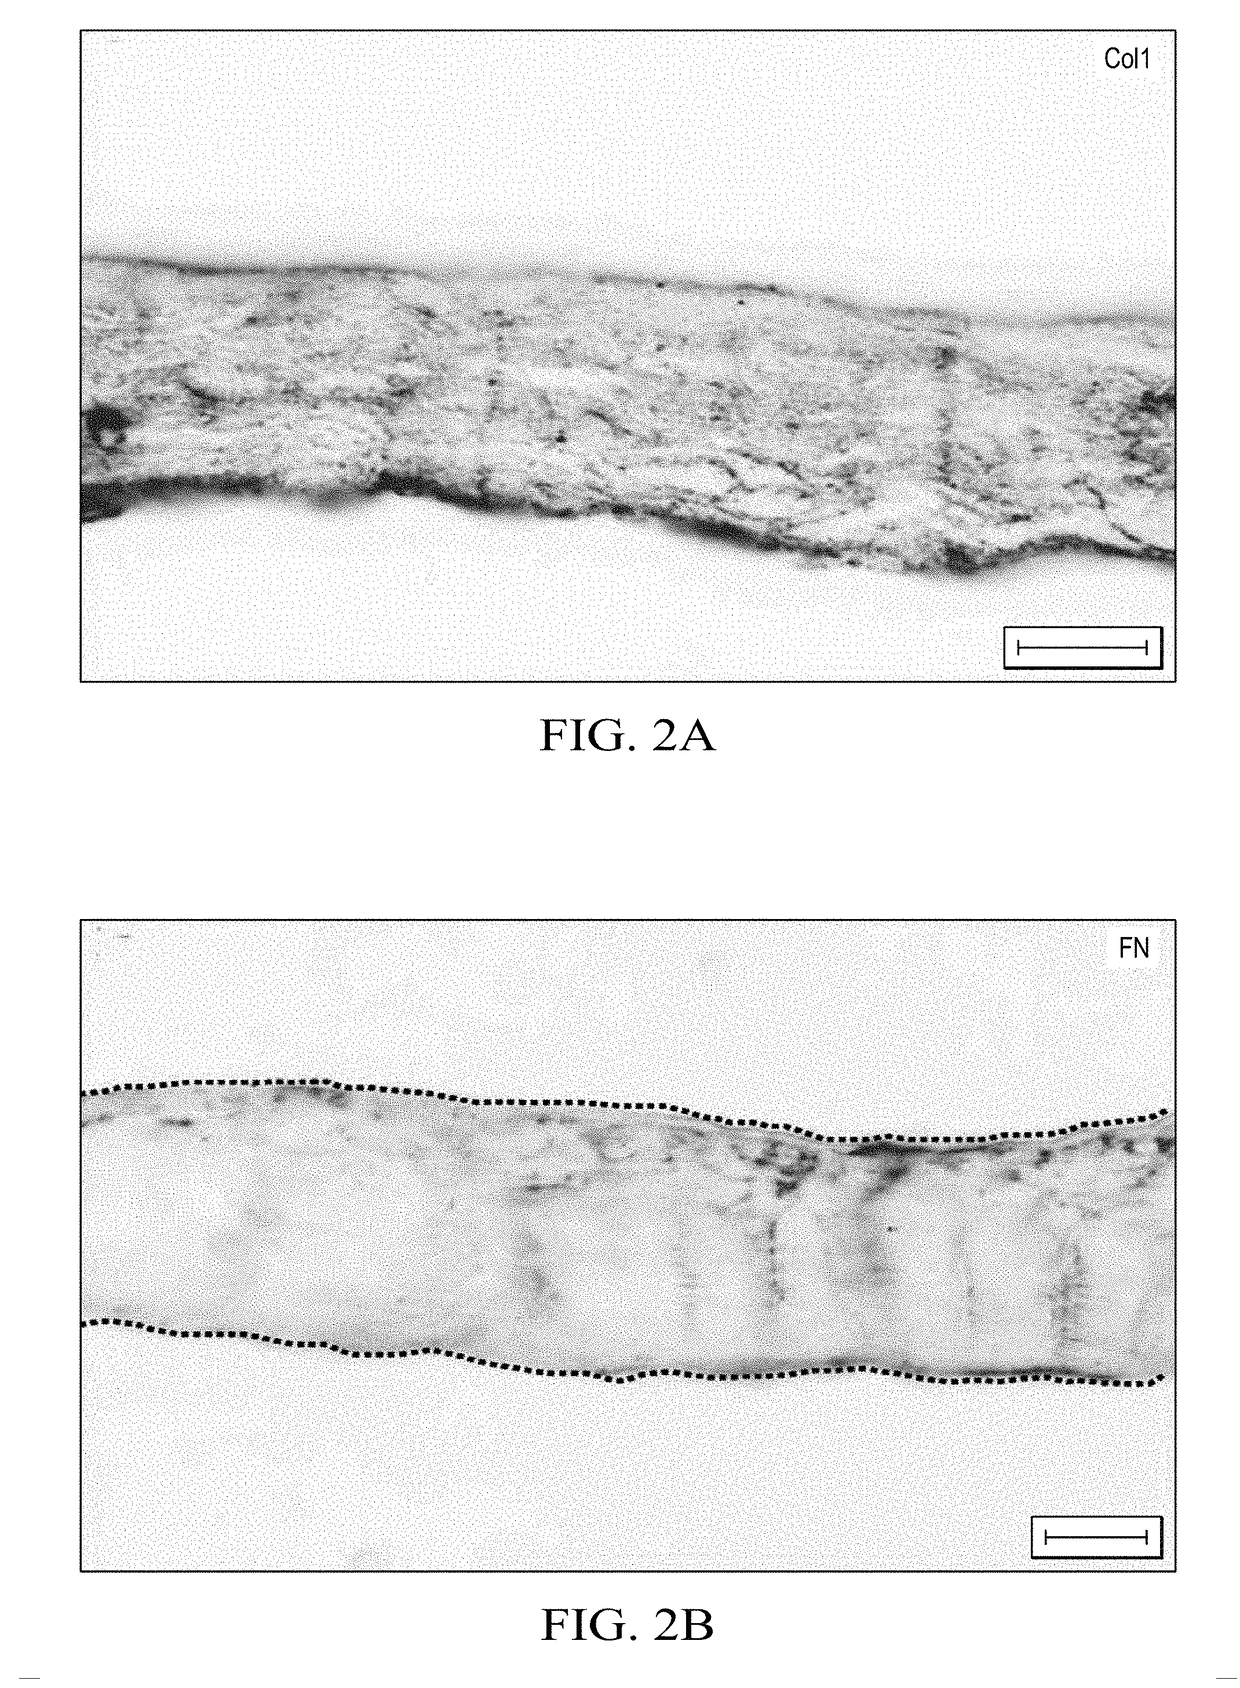 Decellularized biomaterial from mammalian tissue